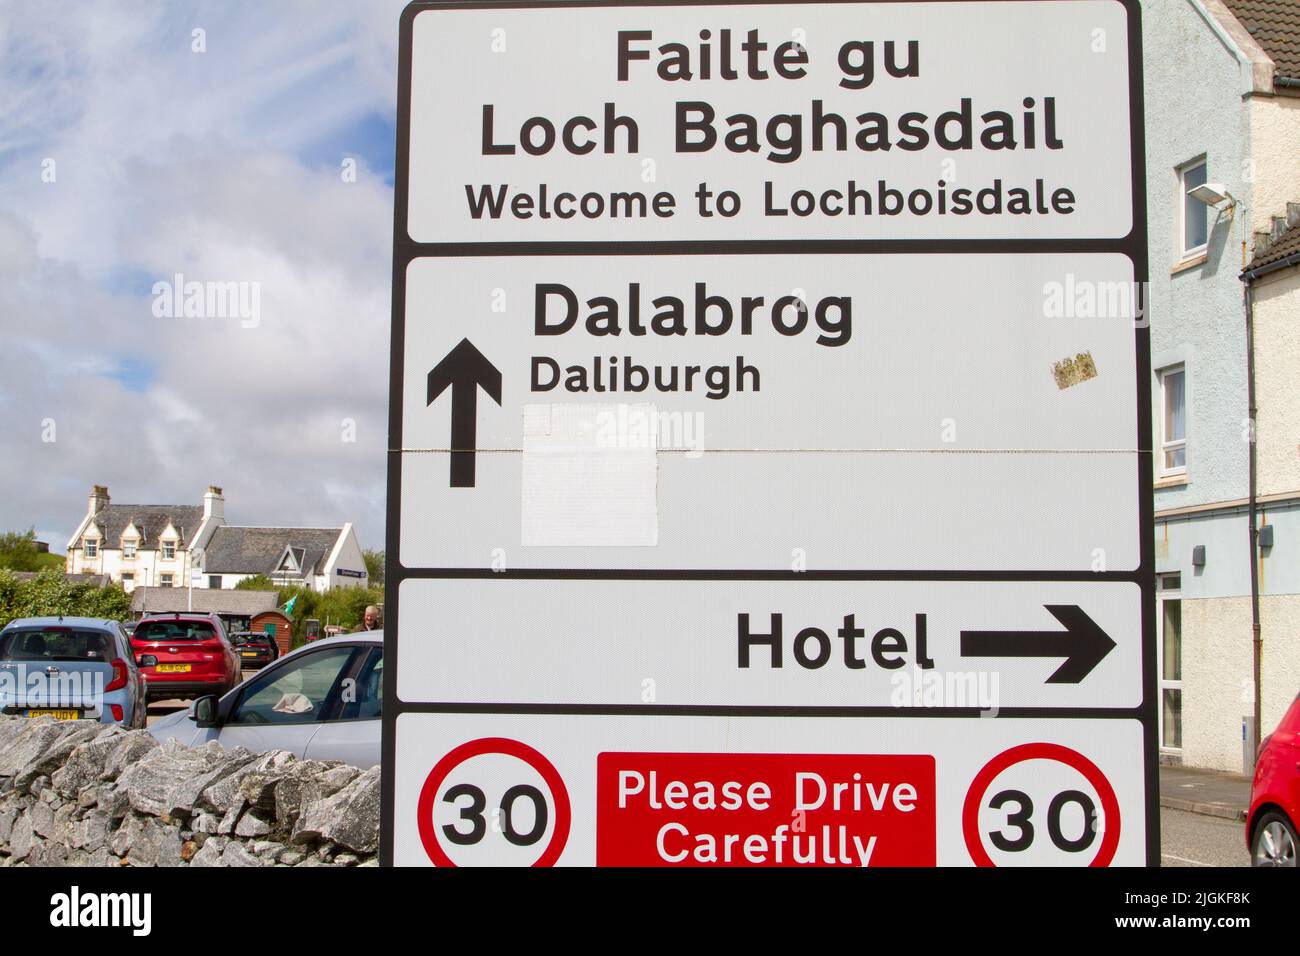 Bienvenido a Lochboisdale/Failte gu Loch Baghasdail, señal de tráfico bilingüe en Lochboisdale, South Uist, Outer Hebrides, Escocia Foto de stock